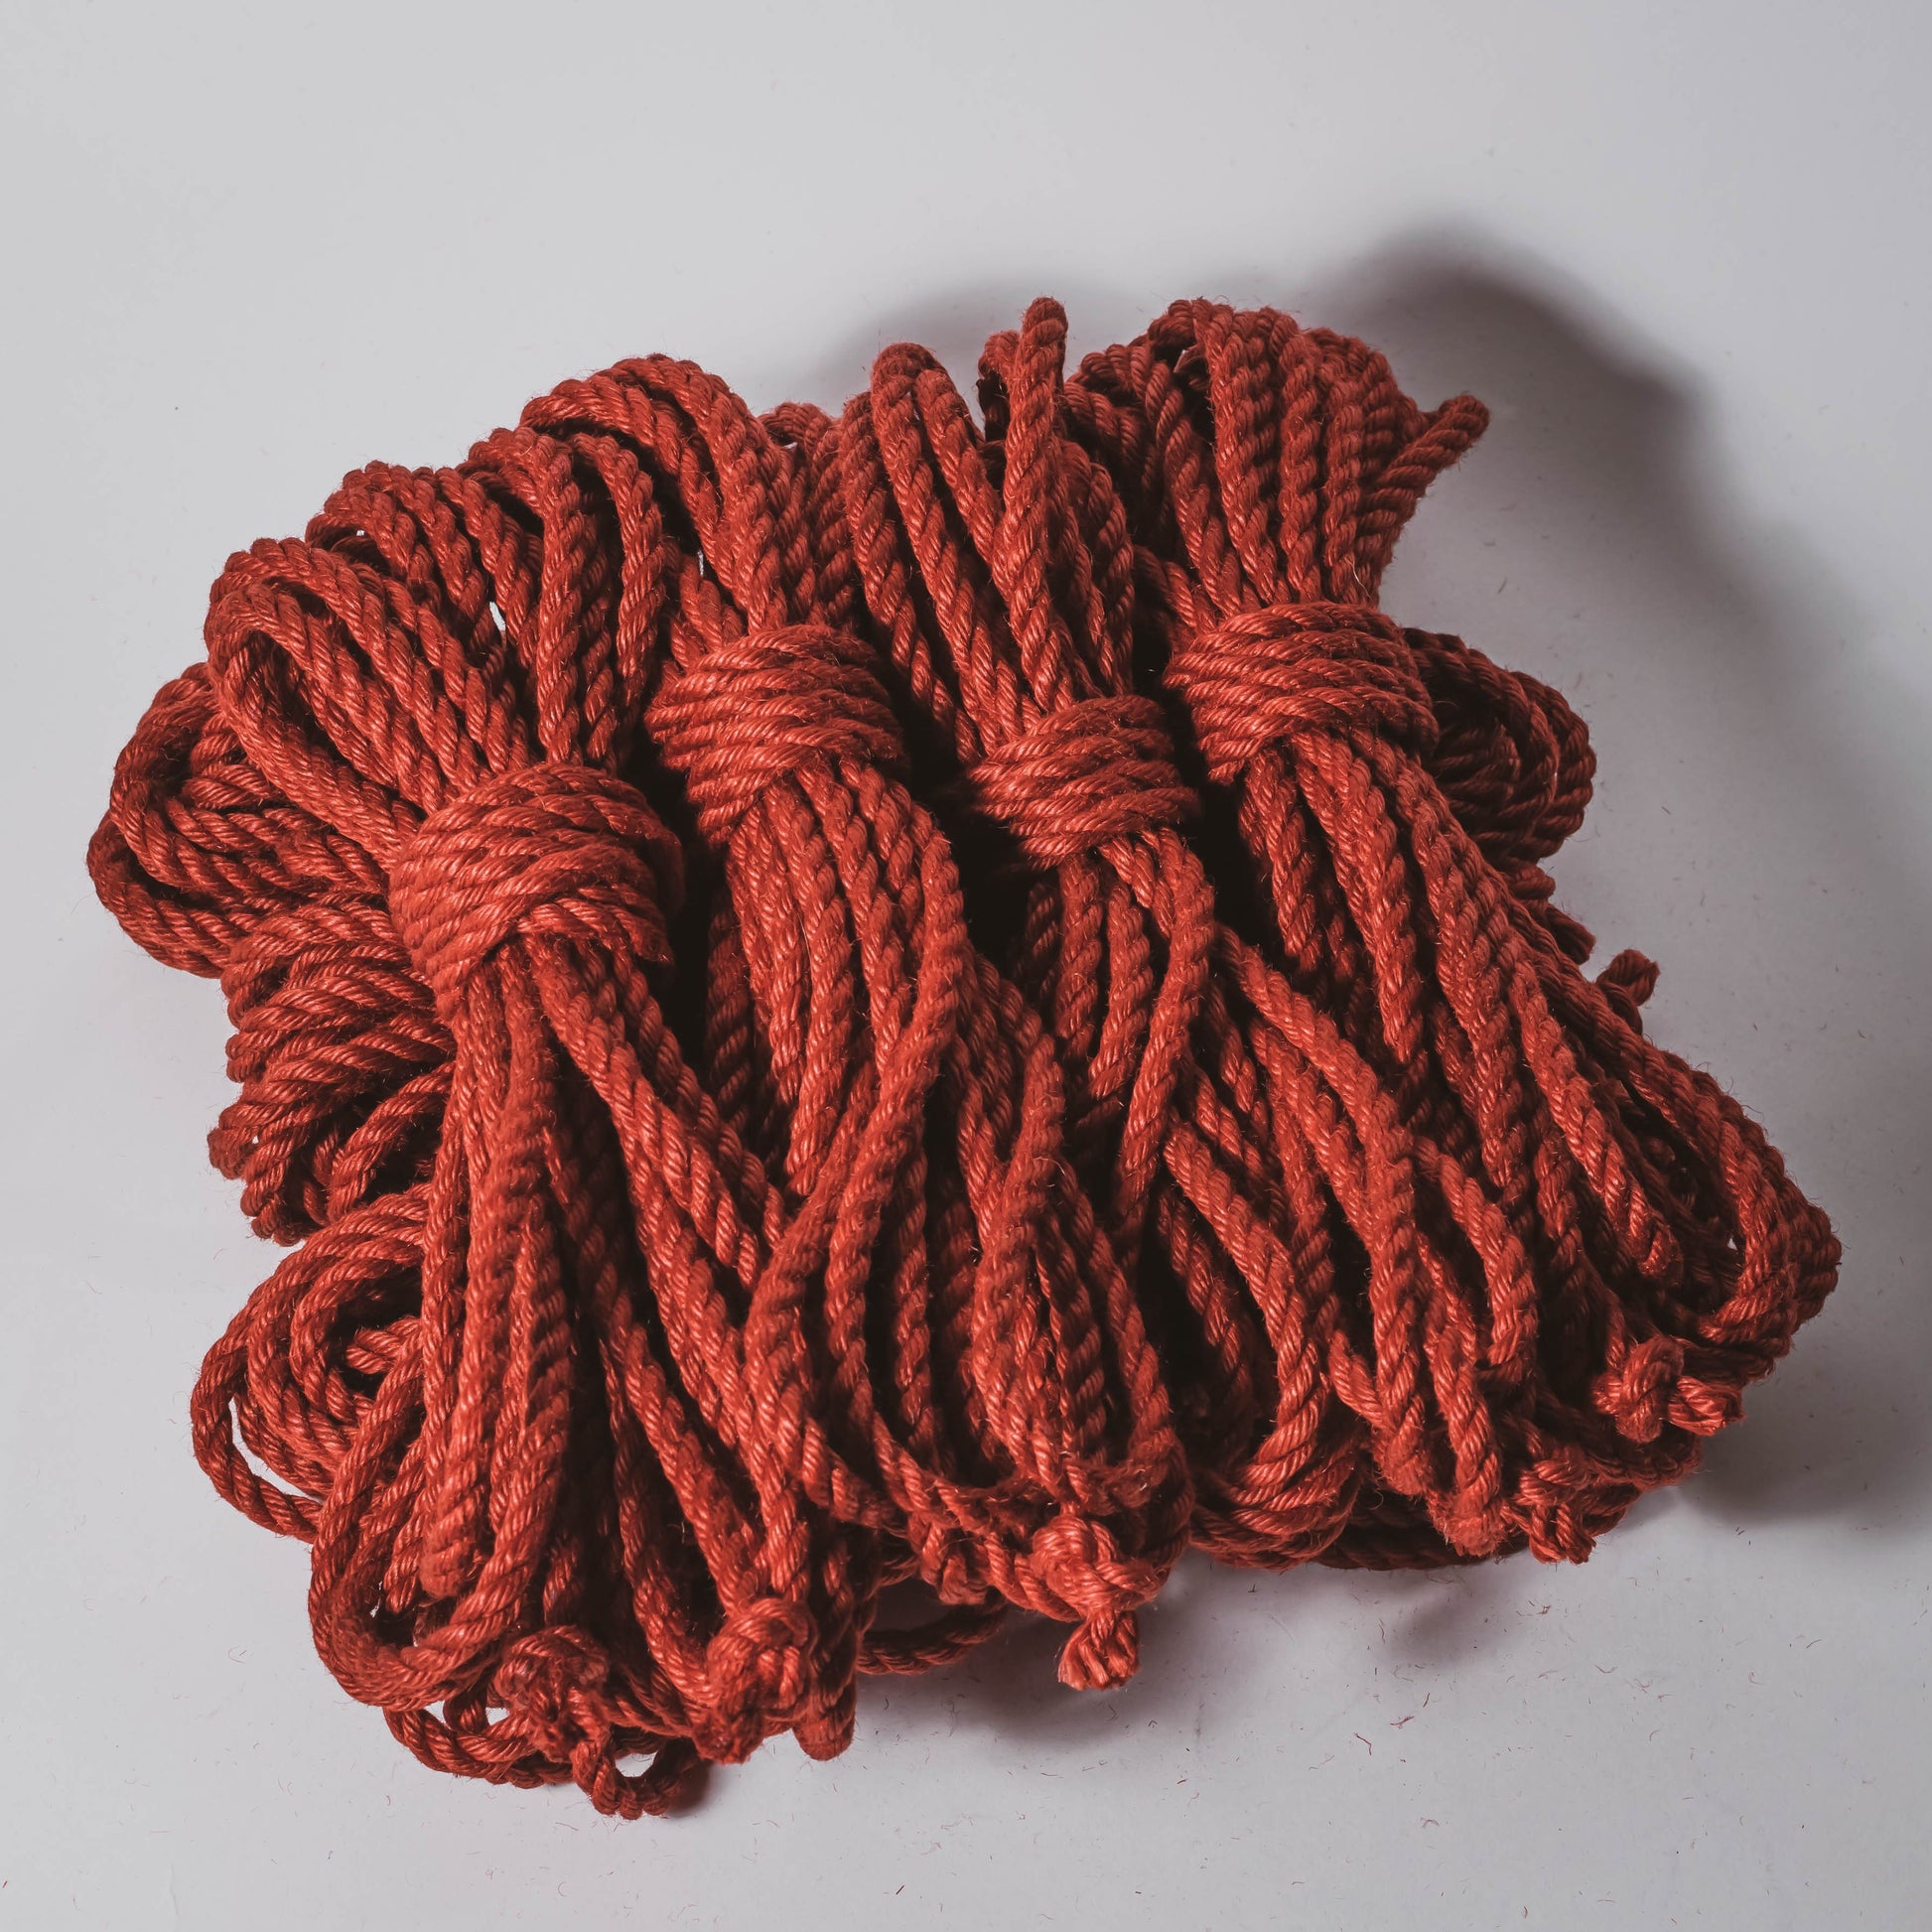 Red jute rope (treated, 6mm) Shibari Rope Bundle of 8 